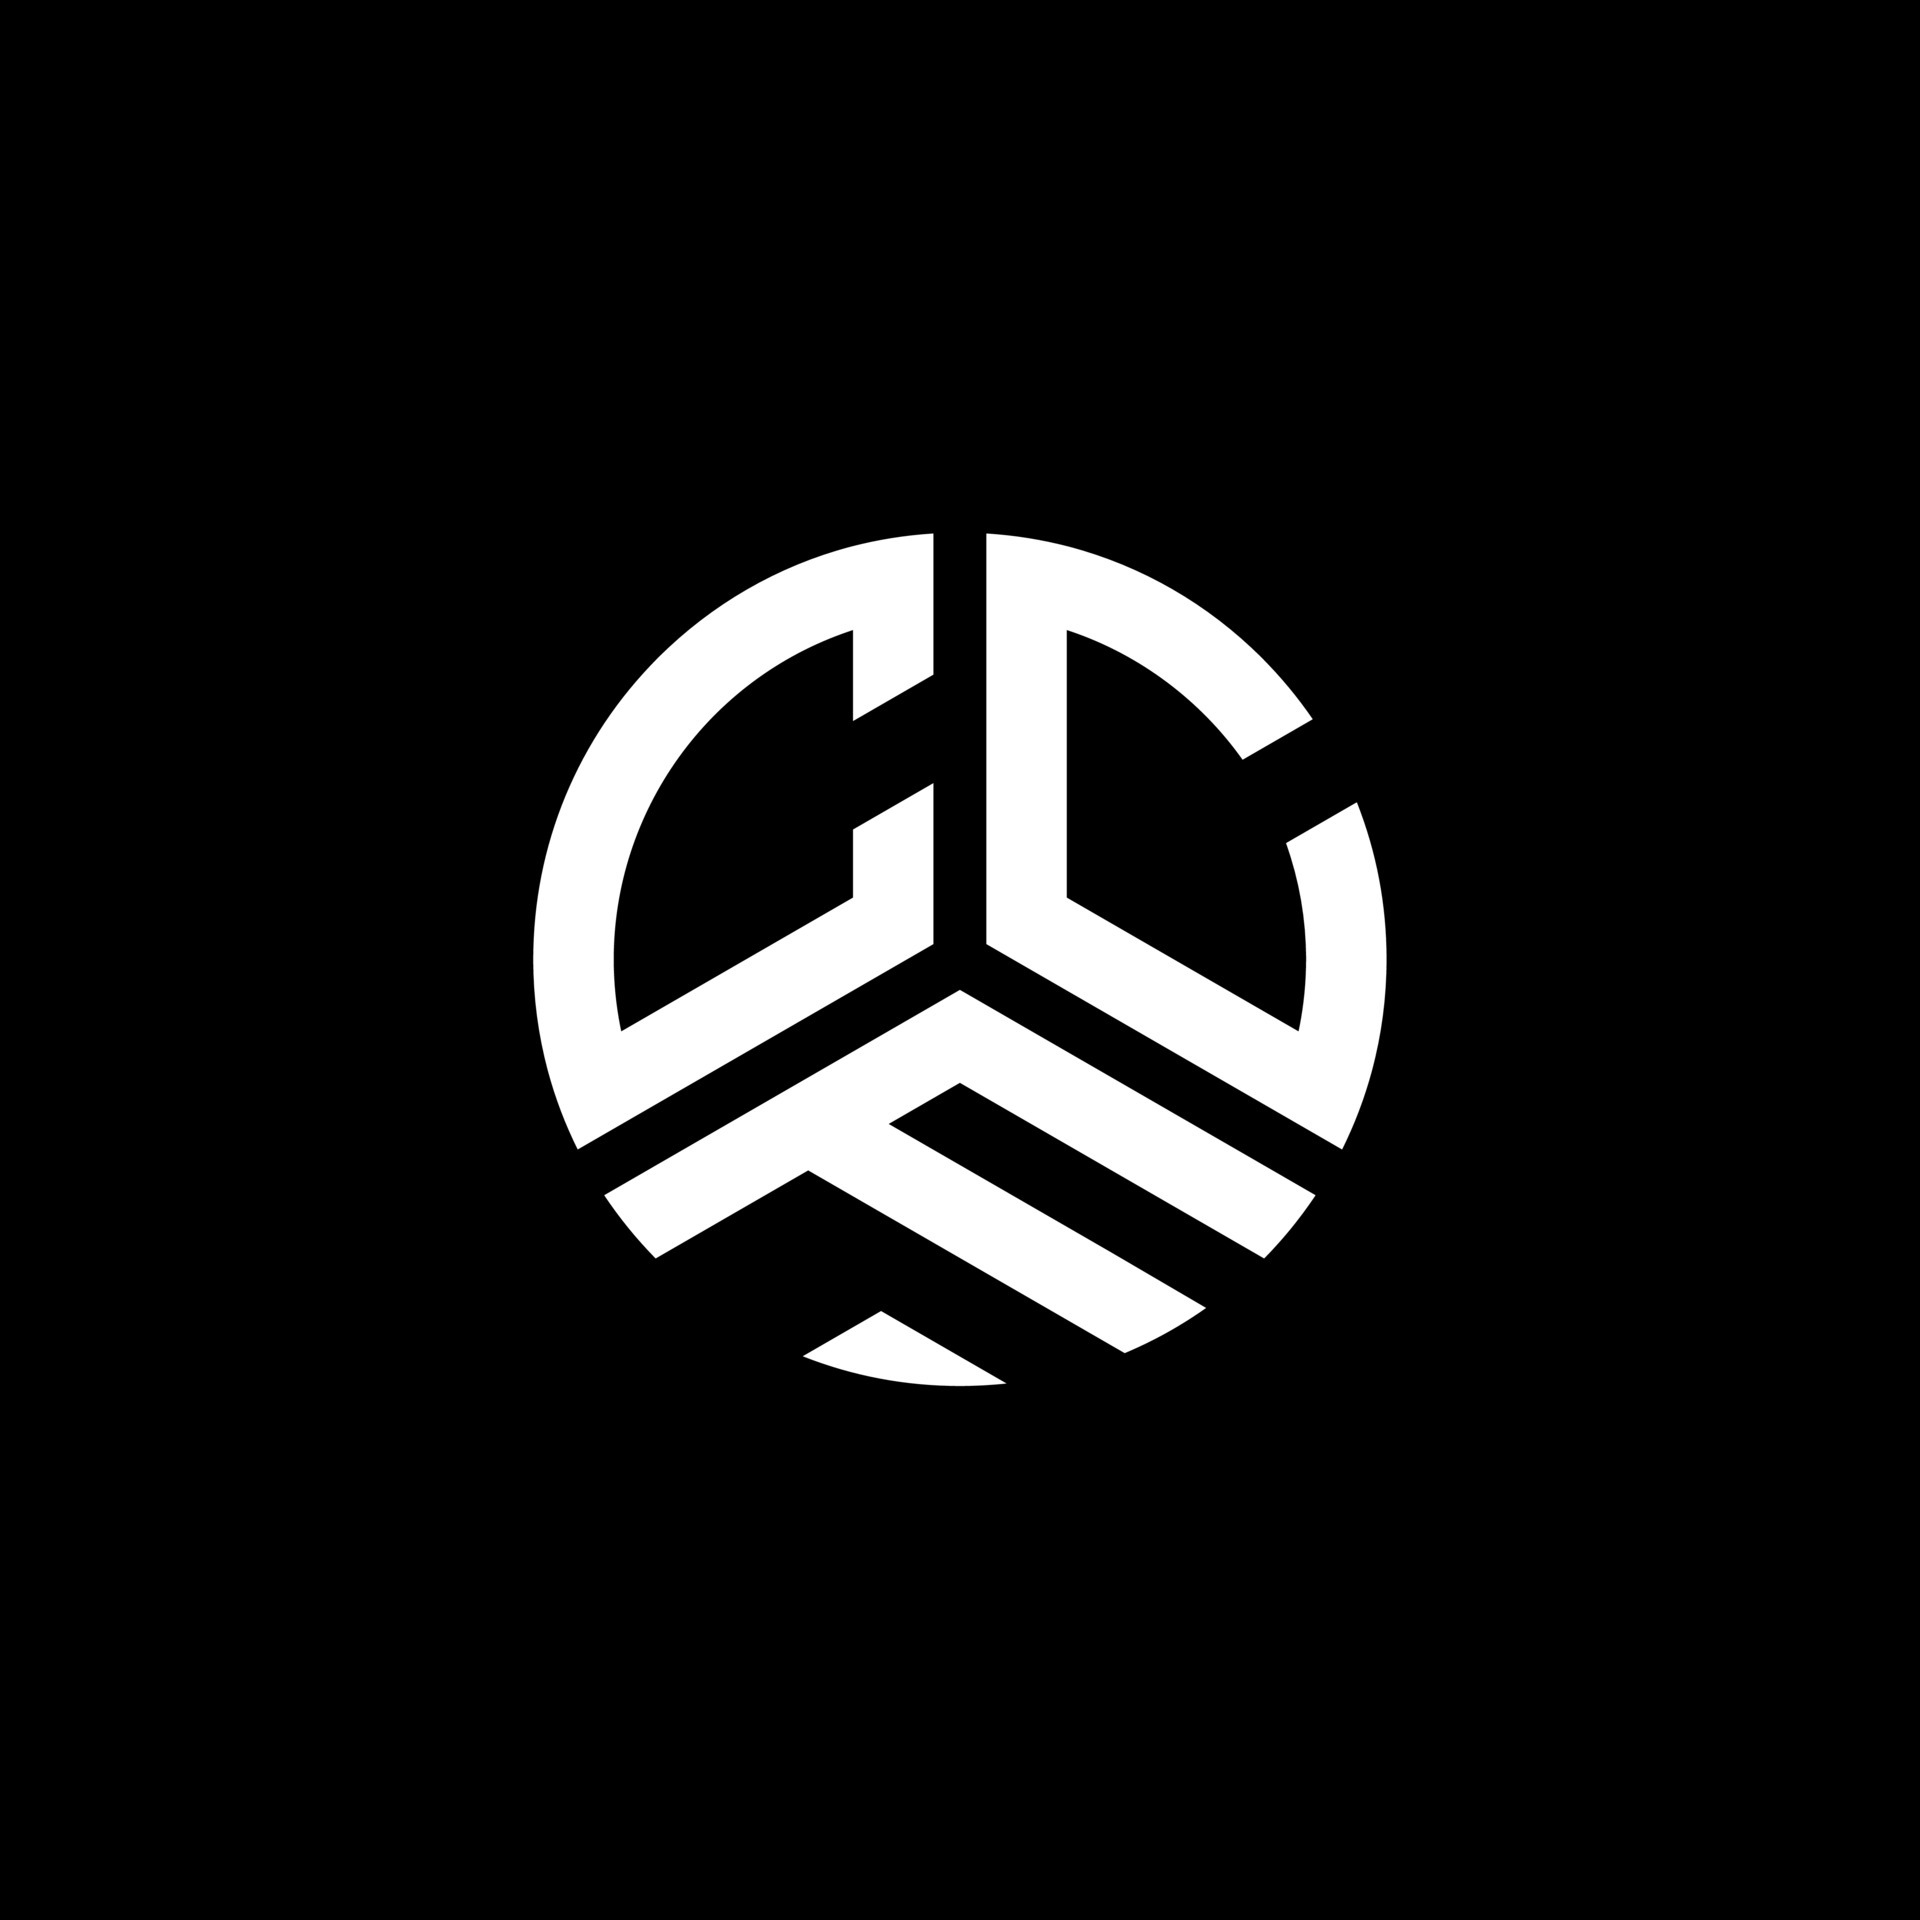 CCF letter logo design on white background. CCF creative initials ...